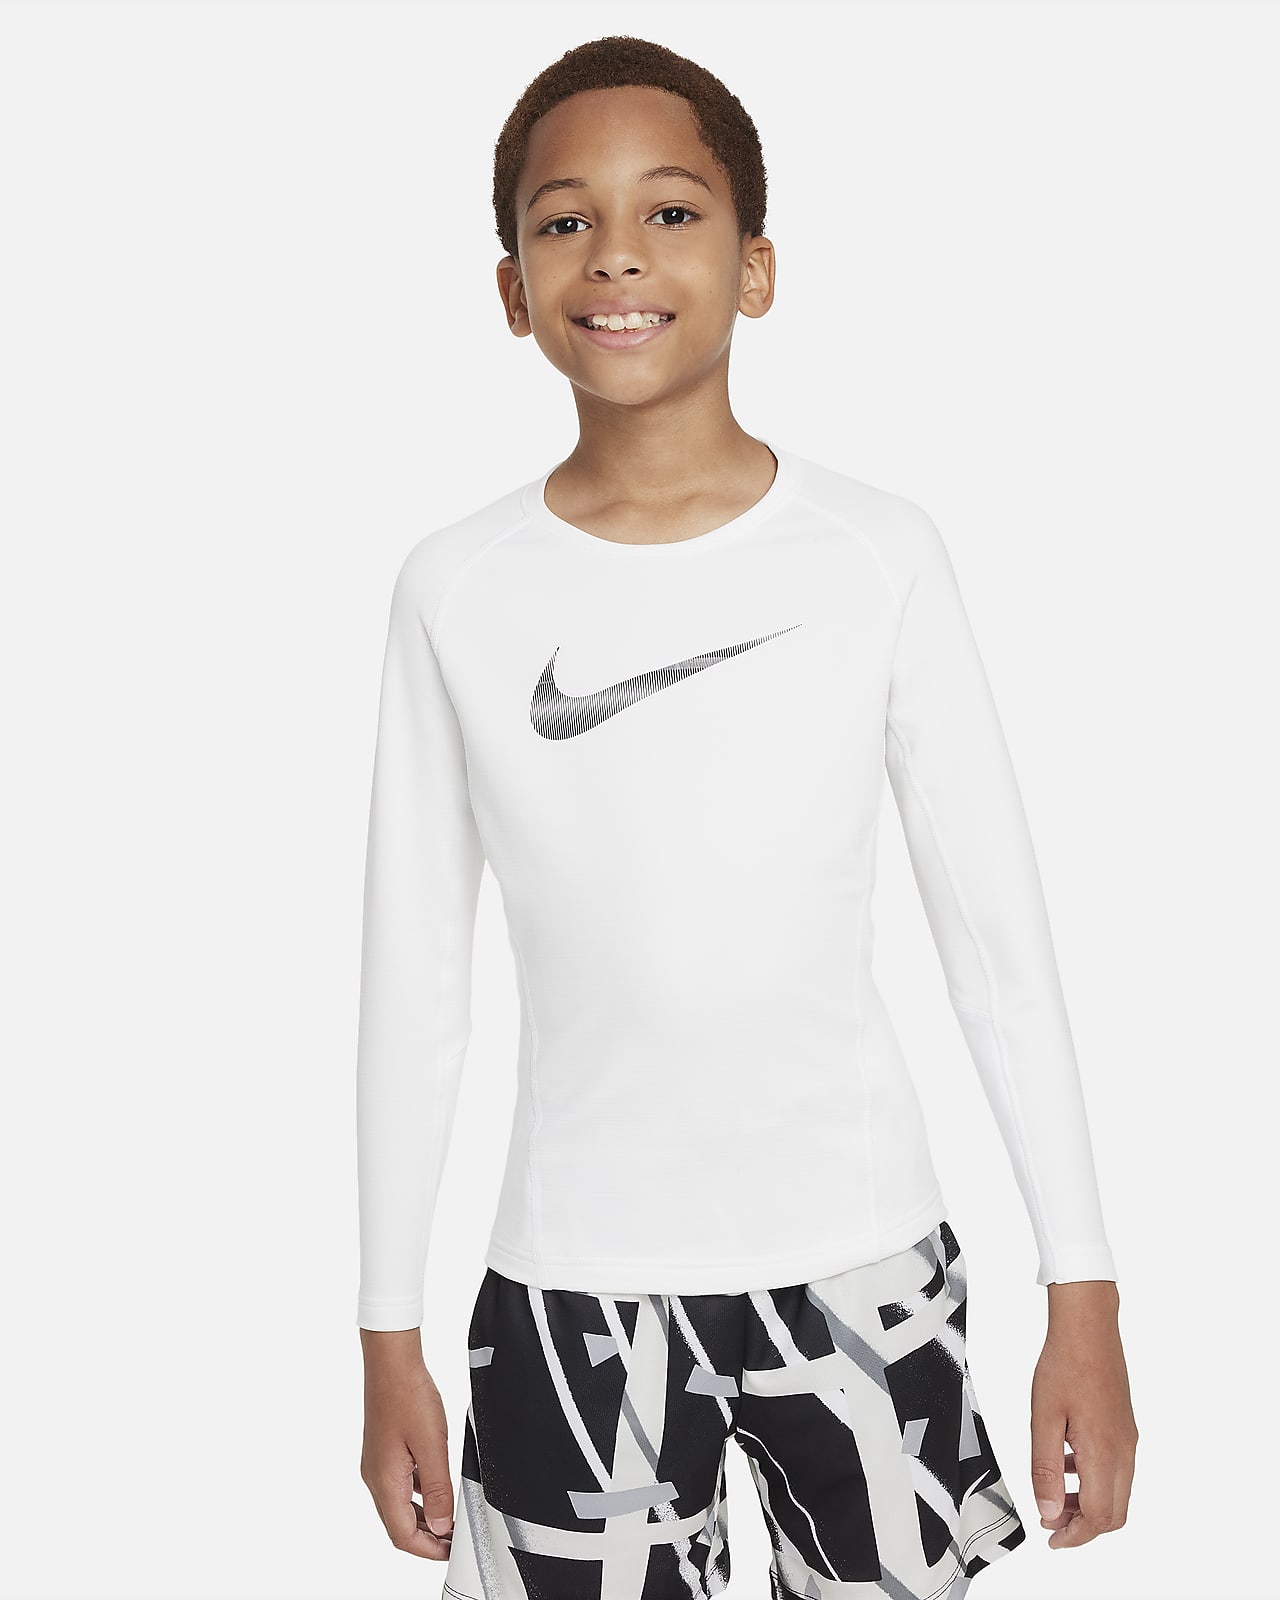 Nike Pro Training Tall logo t-shirt in white